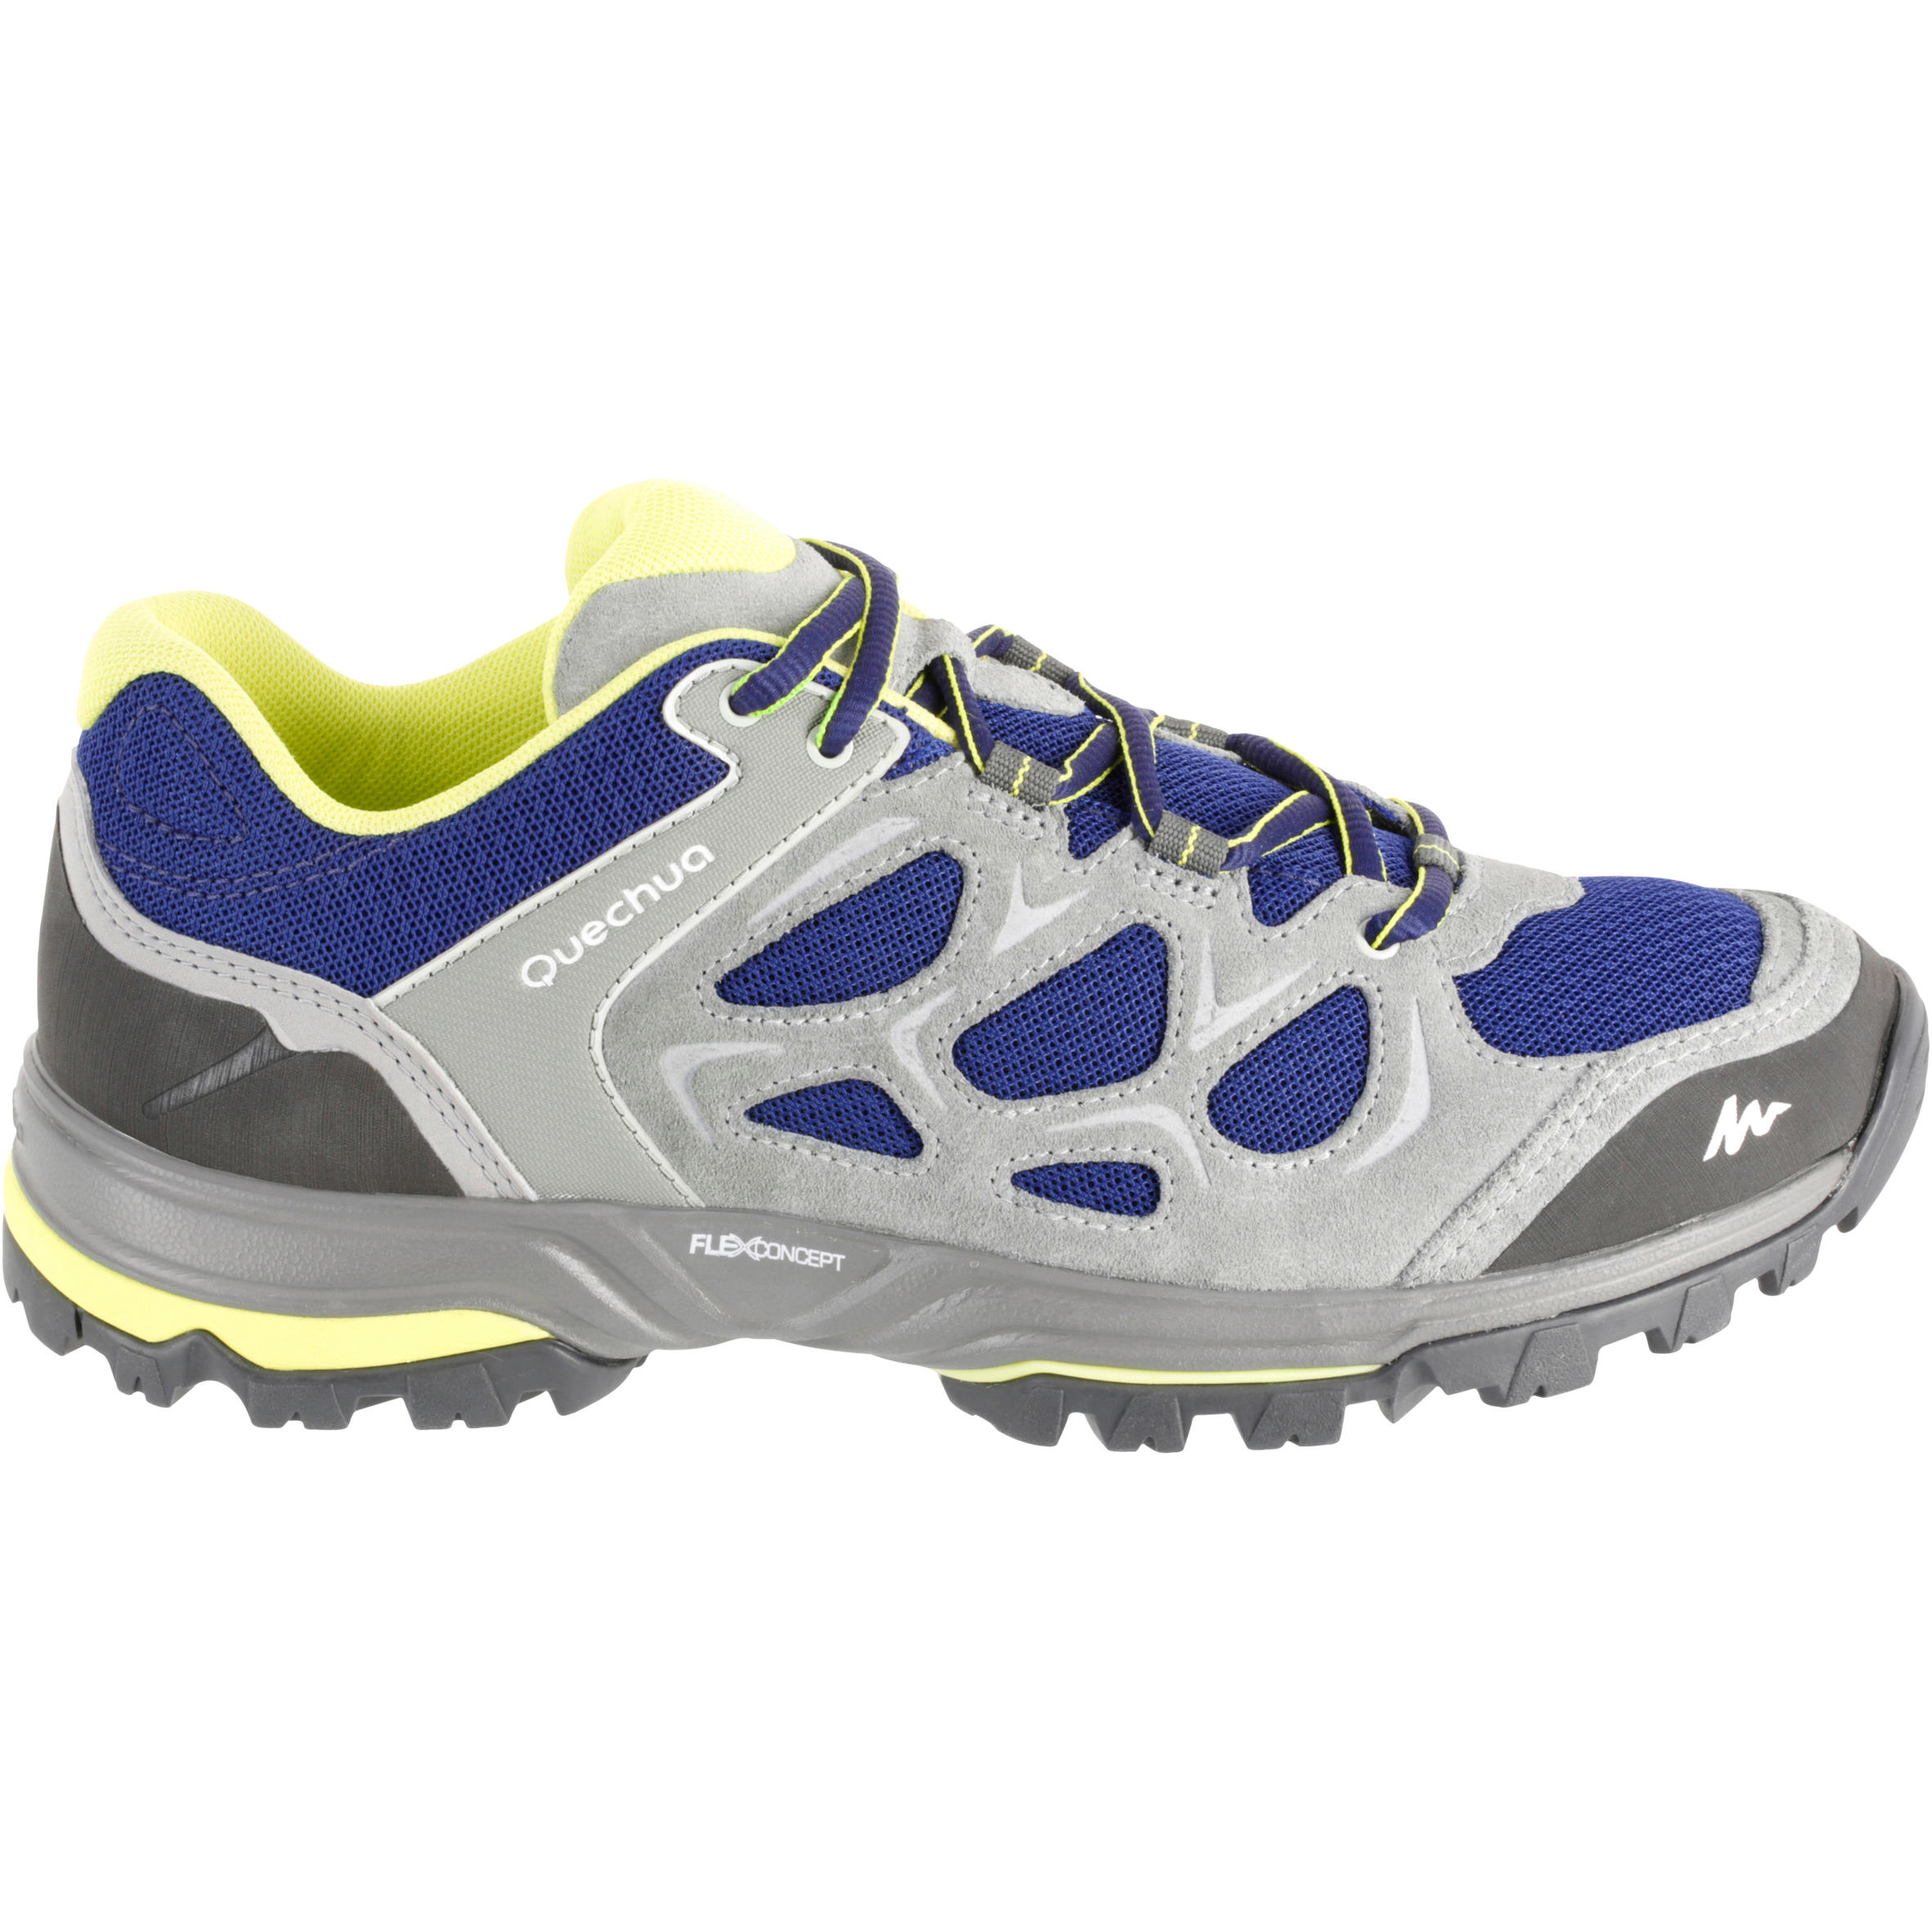 Forclaz Flex 3 Women's Hiking Boots - Blue/Grey 2/17